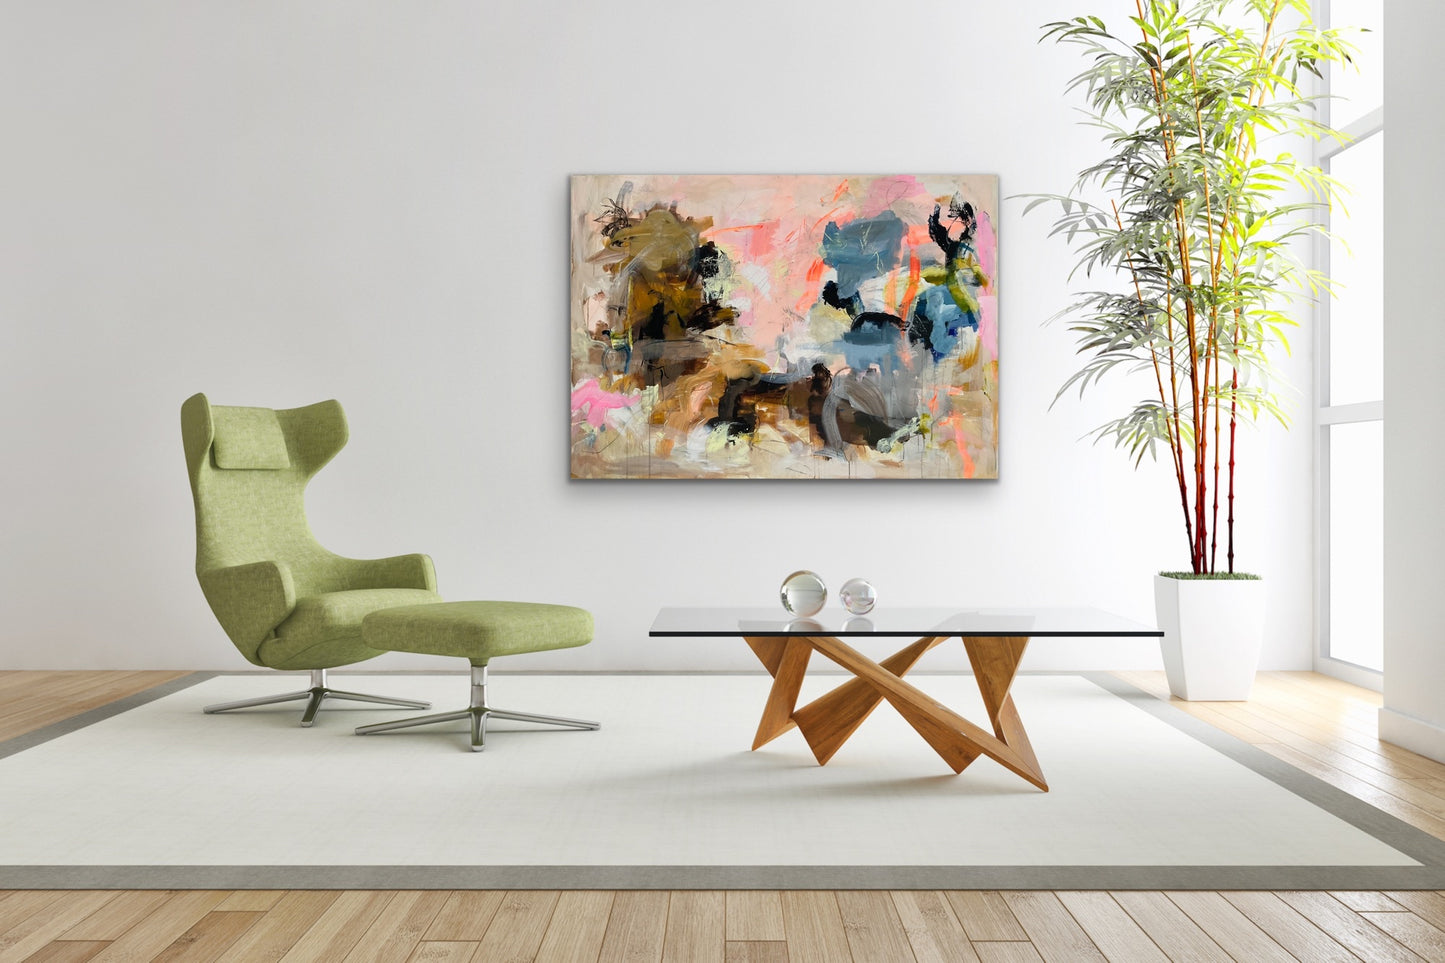 Abstrakt maleri, 100x140 cm, "Nr. 36" by Lone Reedtz , Abstrakt ekspressivt akrylmaleri på lærred